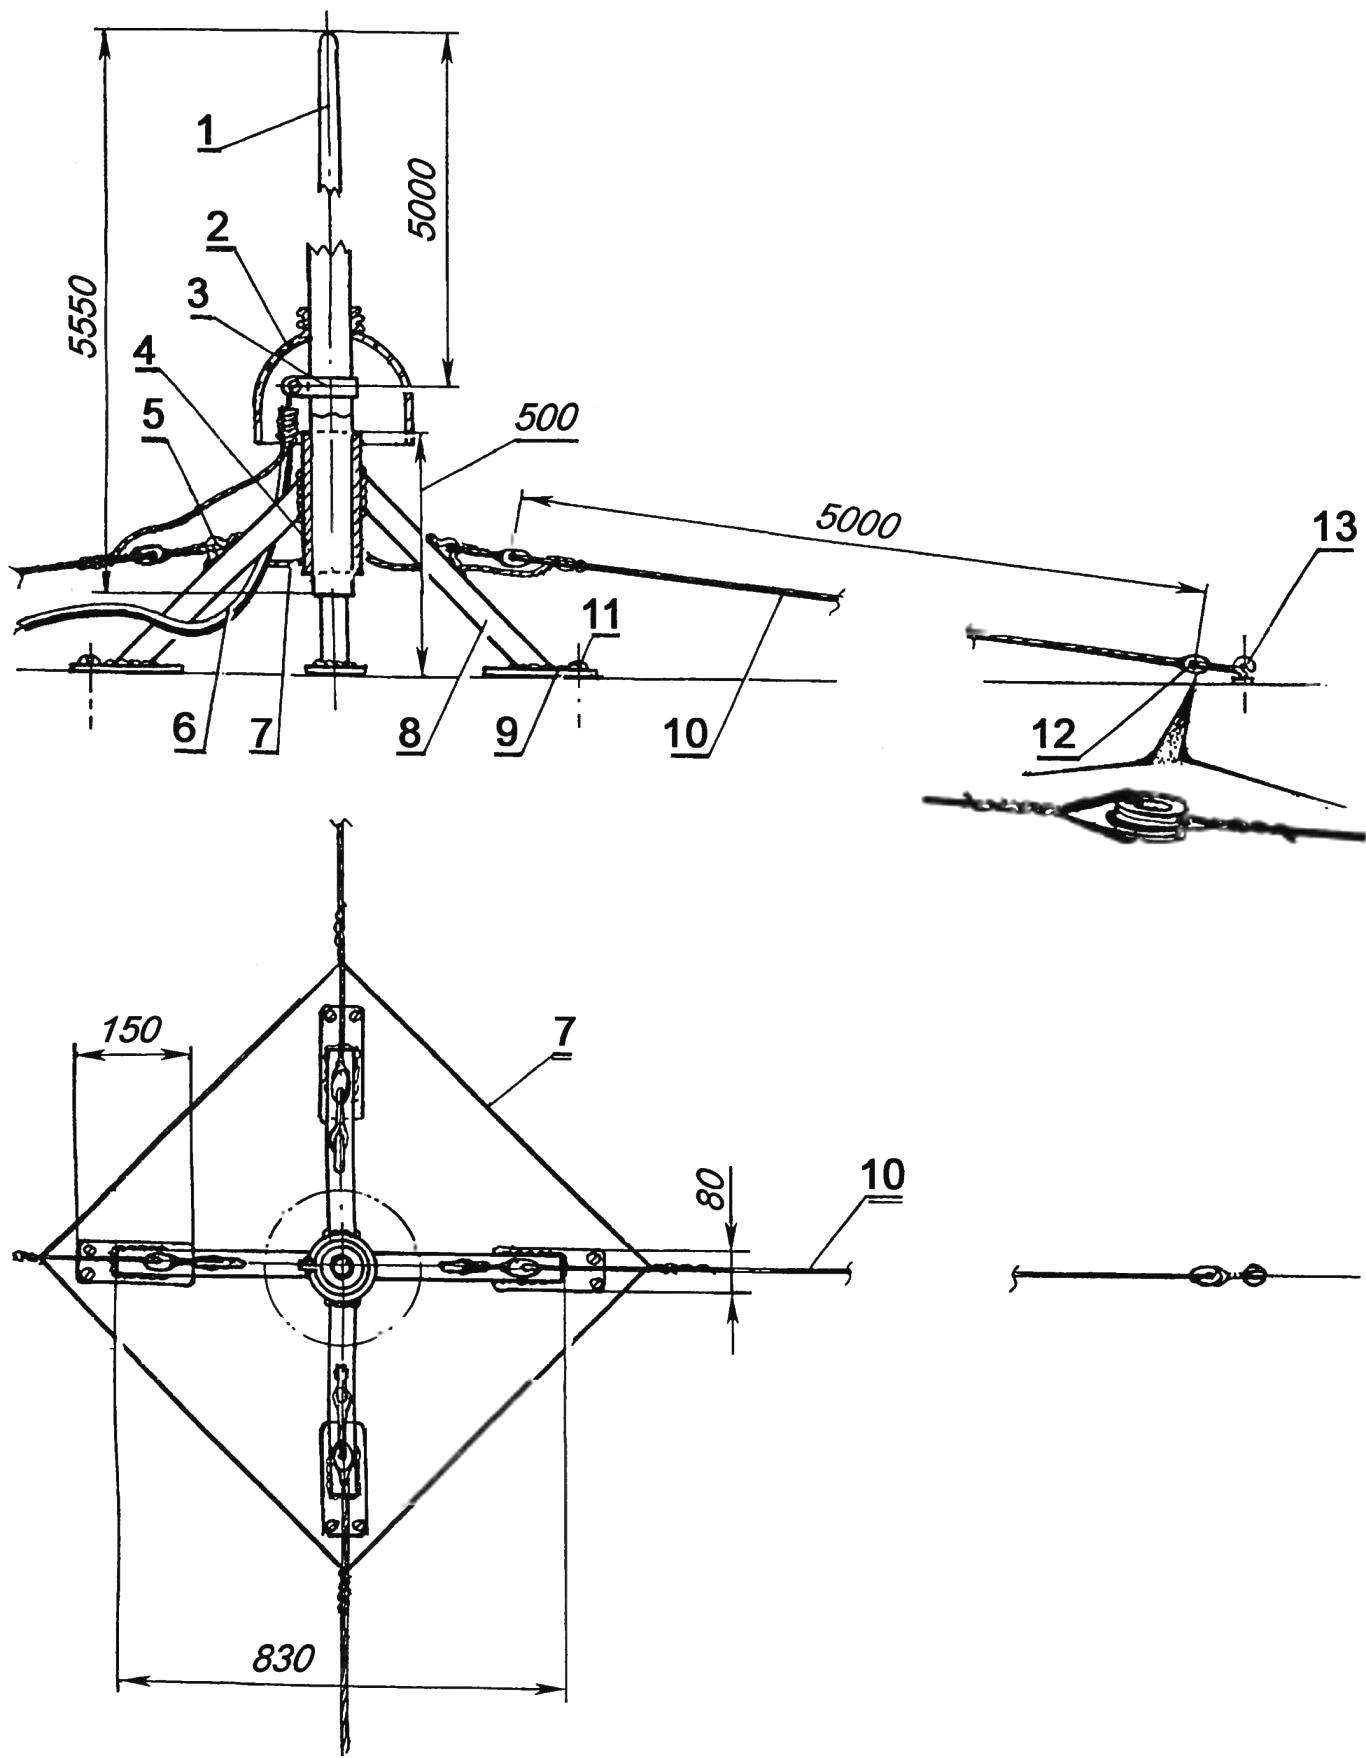 Design of a quarter wave whip antenna type Ground Plane